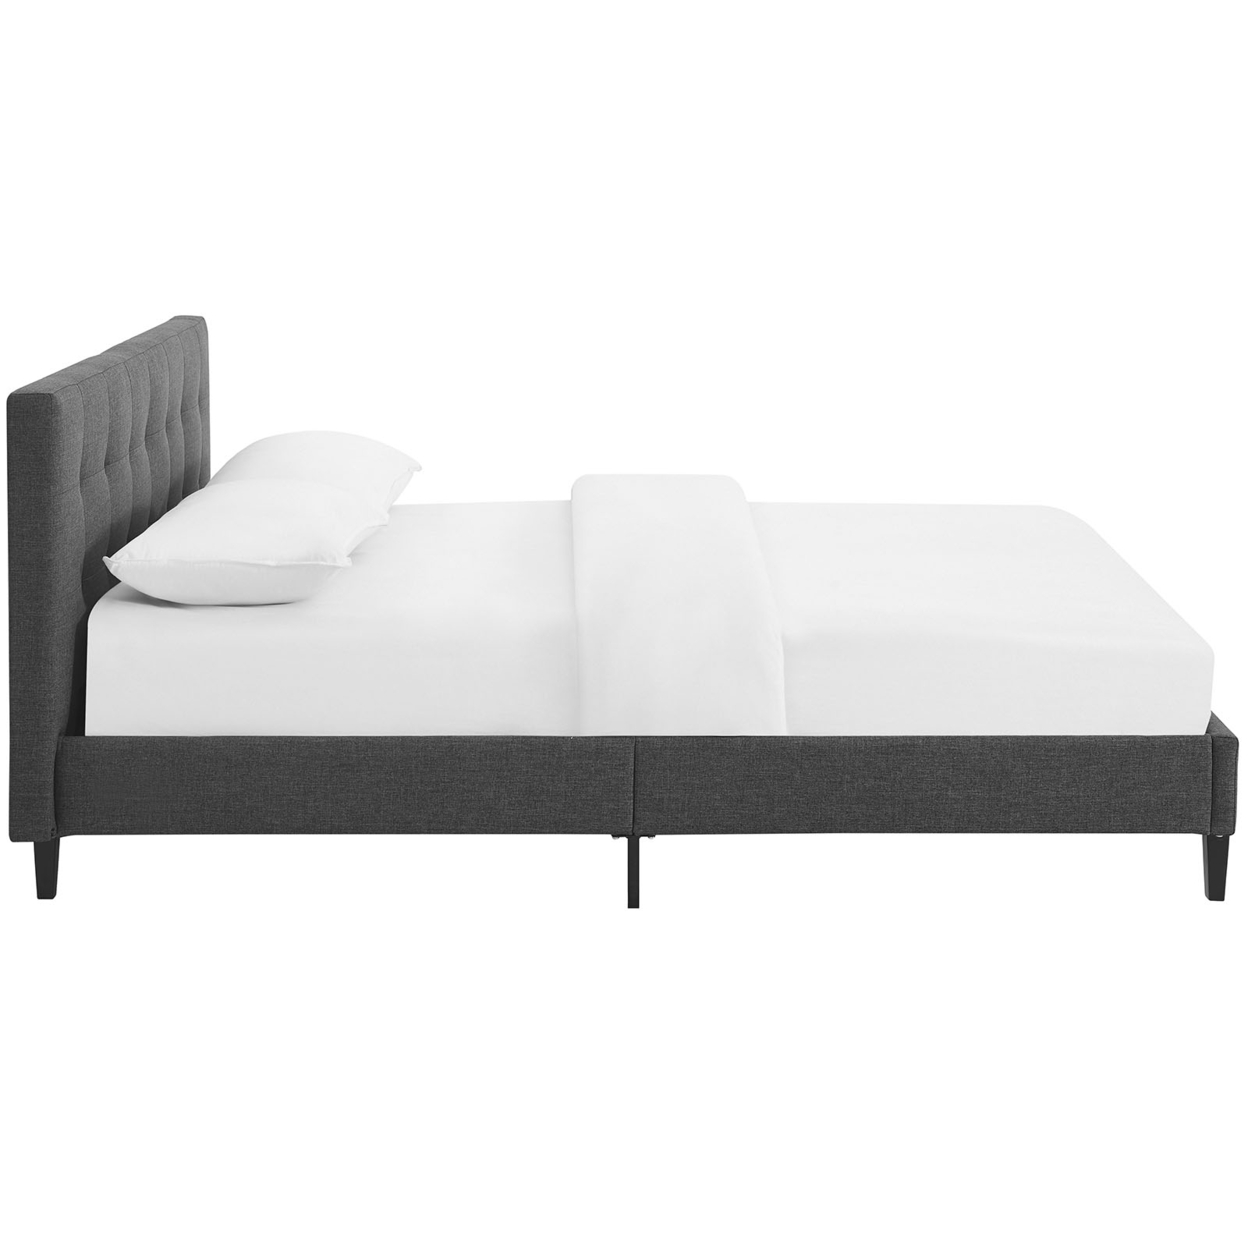 Linnea Queen Fabric Bed, Gray